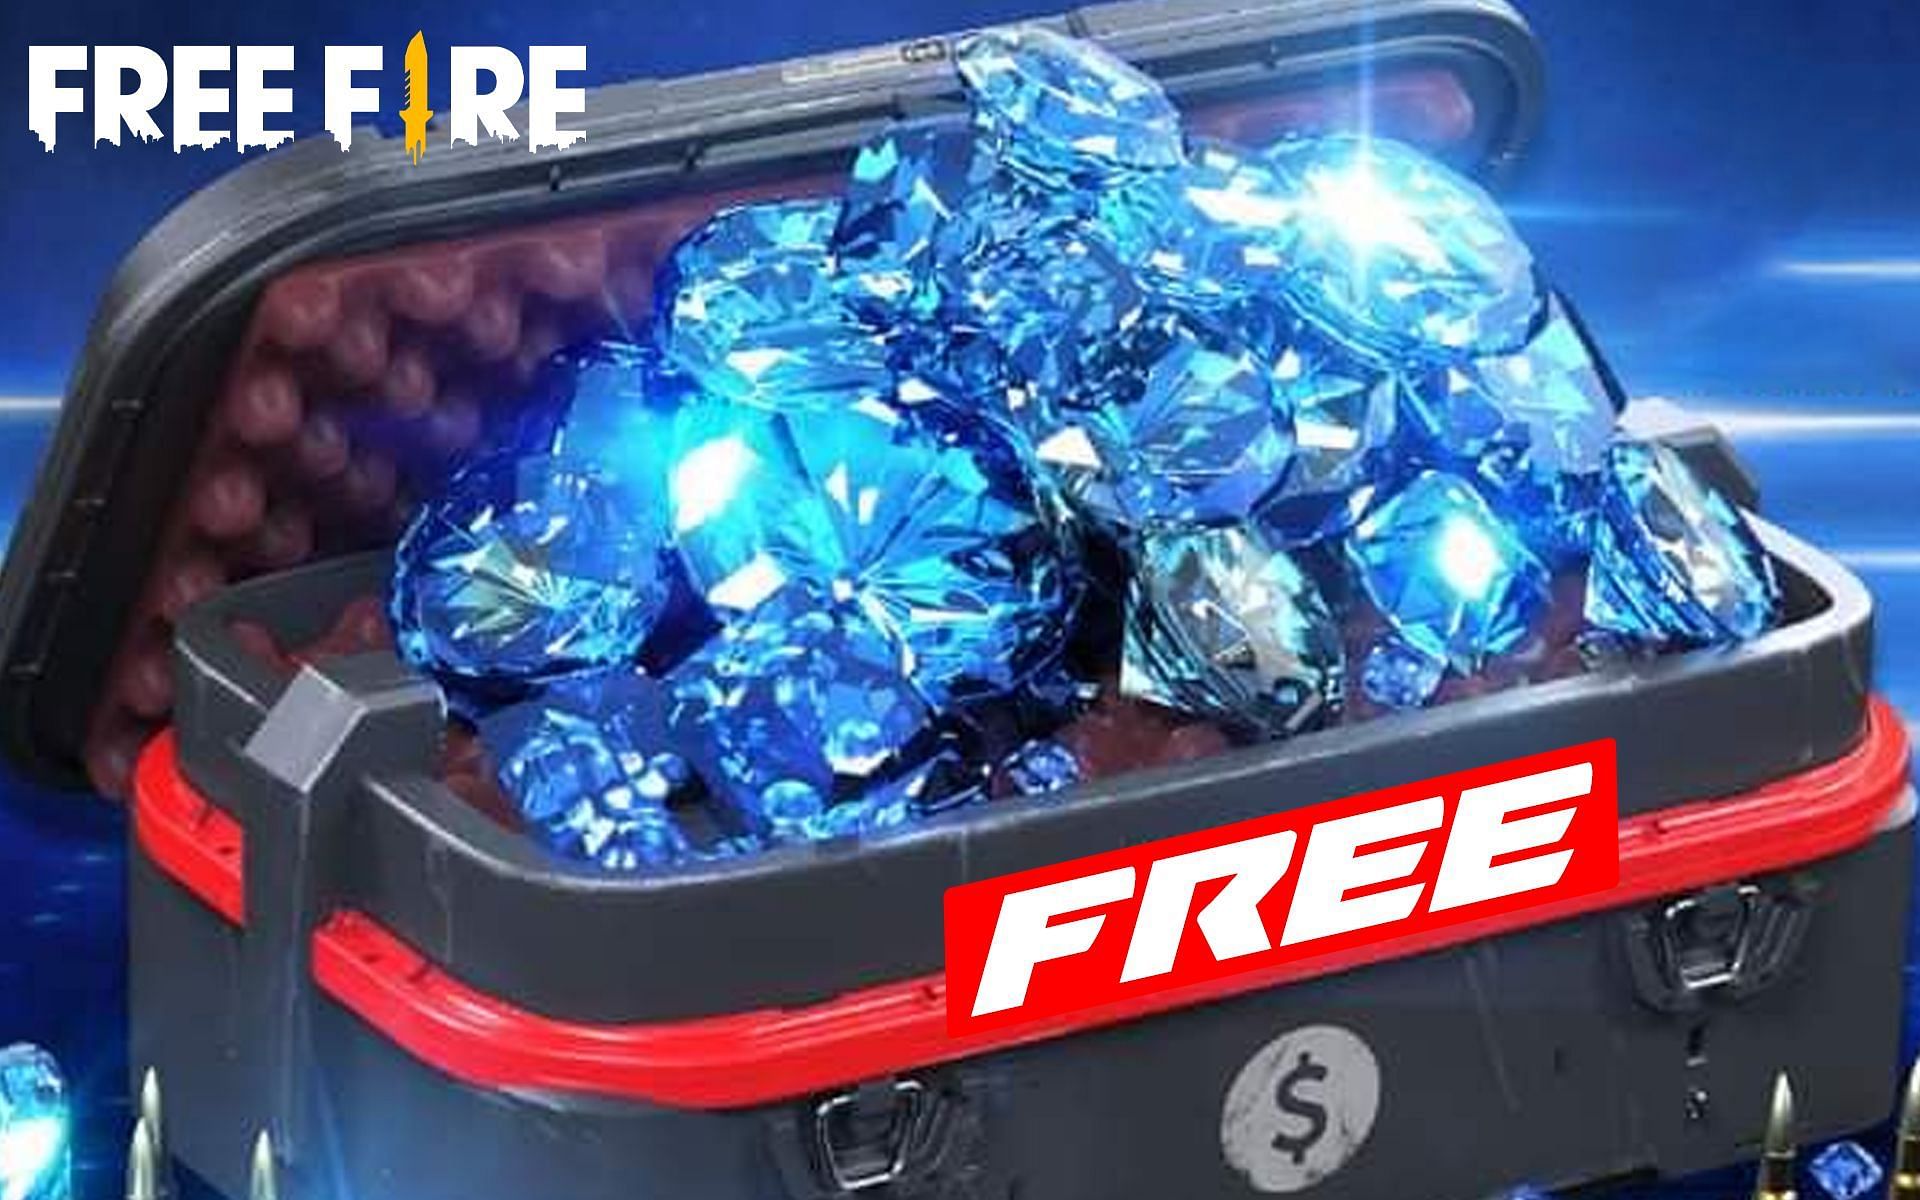 Google Opinion Reward is the best method to get free diamonds in Free Fire (Image via Sportskeeda)